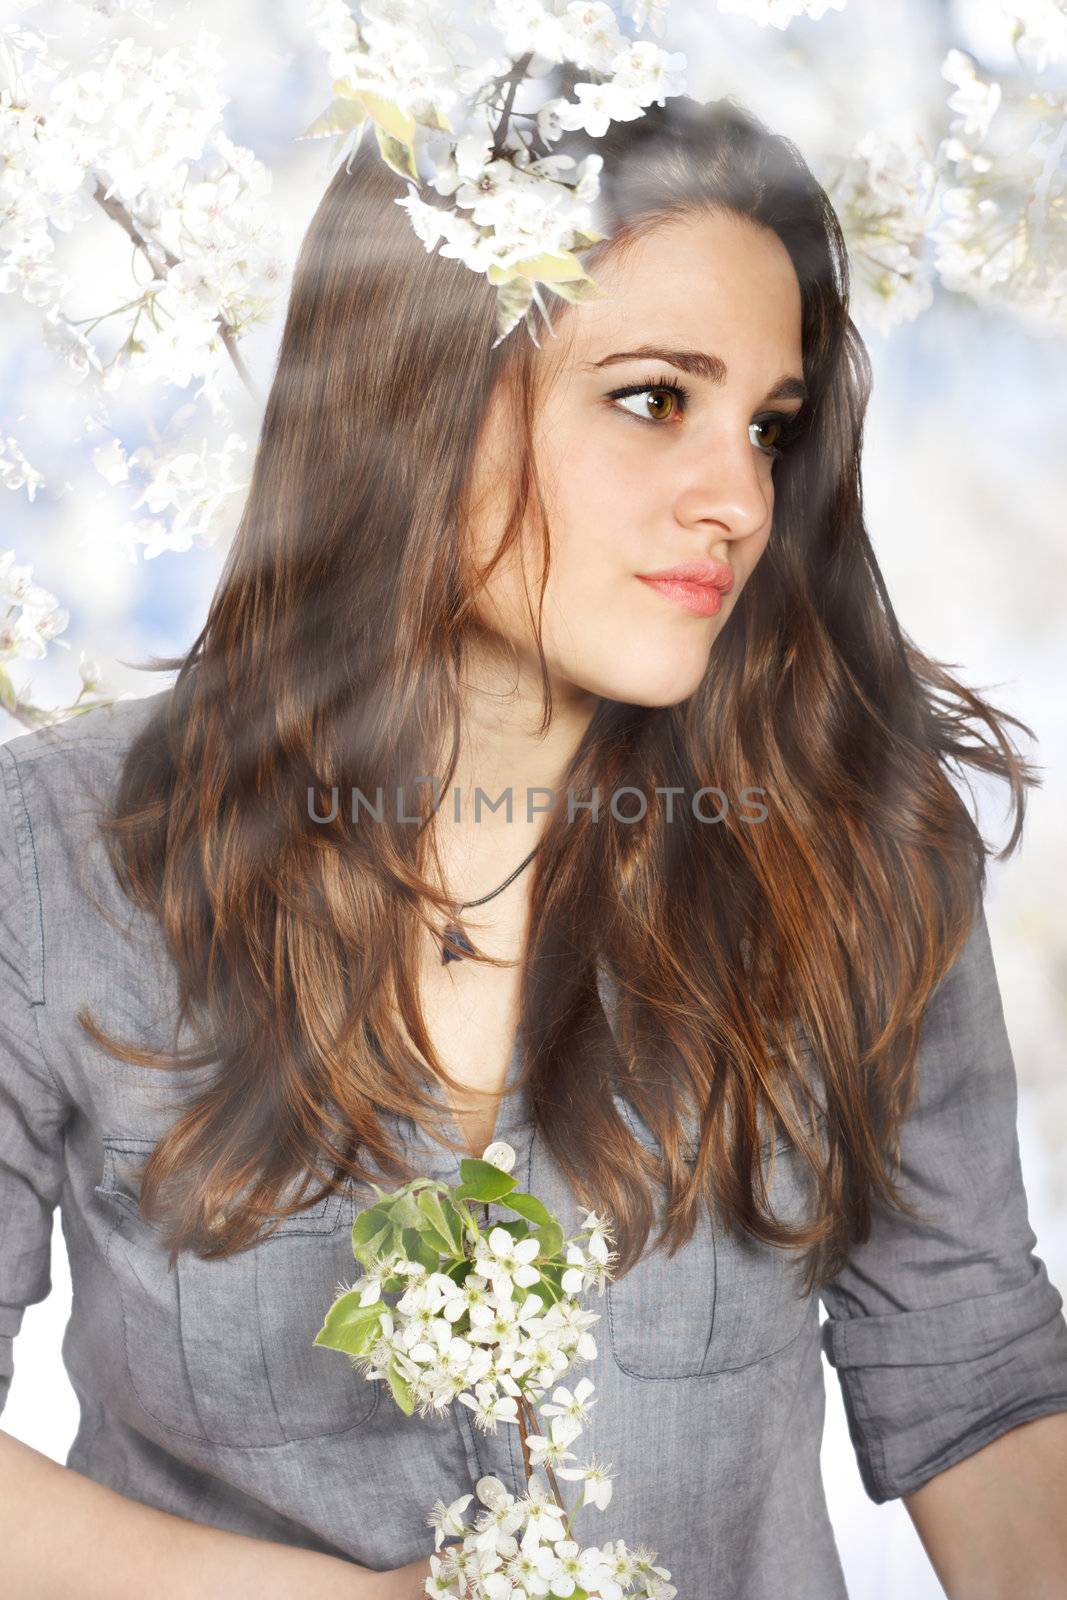 Beautiful Girl with Flowers  by melpomene